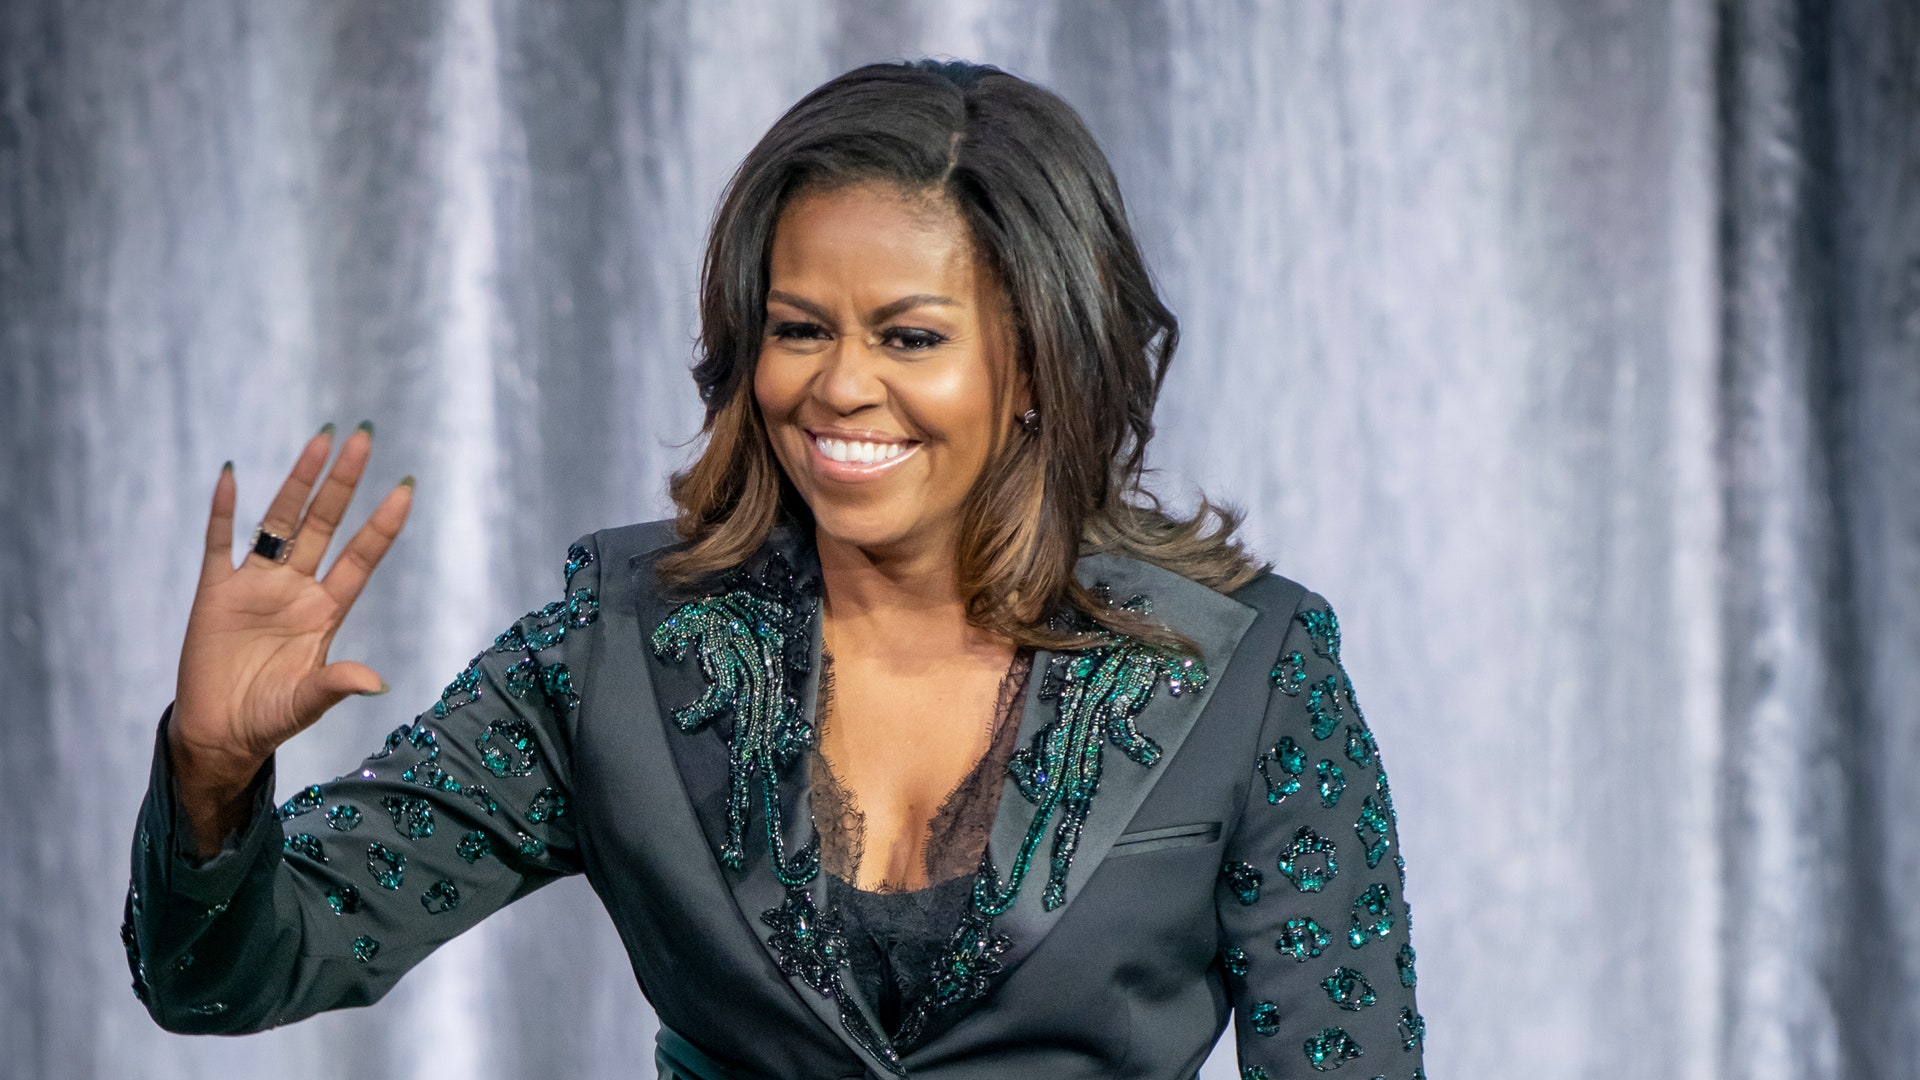 Michelle Obama: Αυτός είναι ο No1 λόγος που δεν θα την δούμε ποτέ με μαγιό Την αποκάλυψη αυτή της Michelle Obama έκανε ο σύζυγός της και πρώην Πρόεδρος των ΗΠΑ, Barack Obama σε πρόσφατη συνέντευξή του.